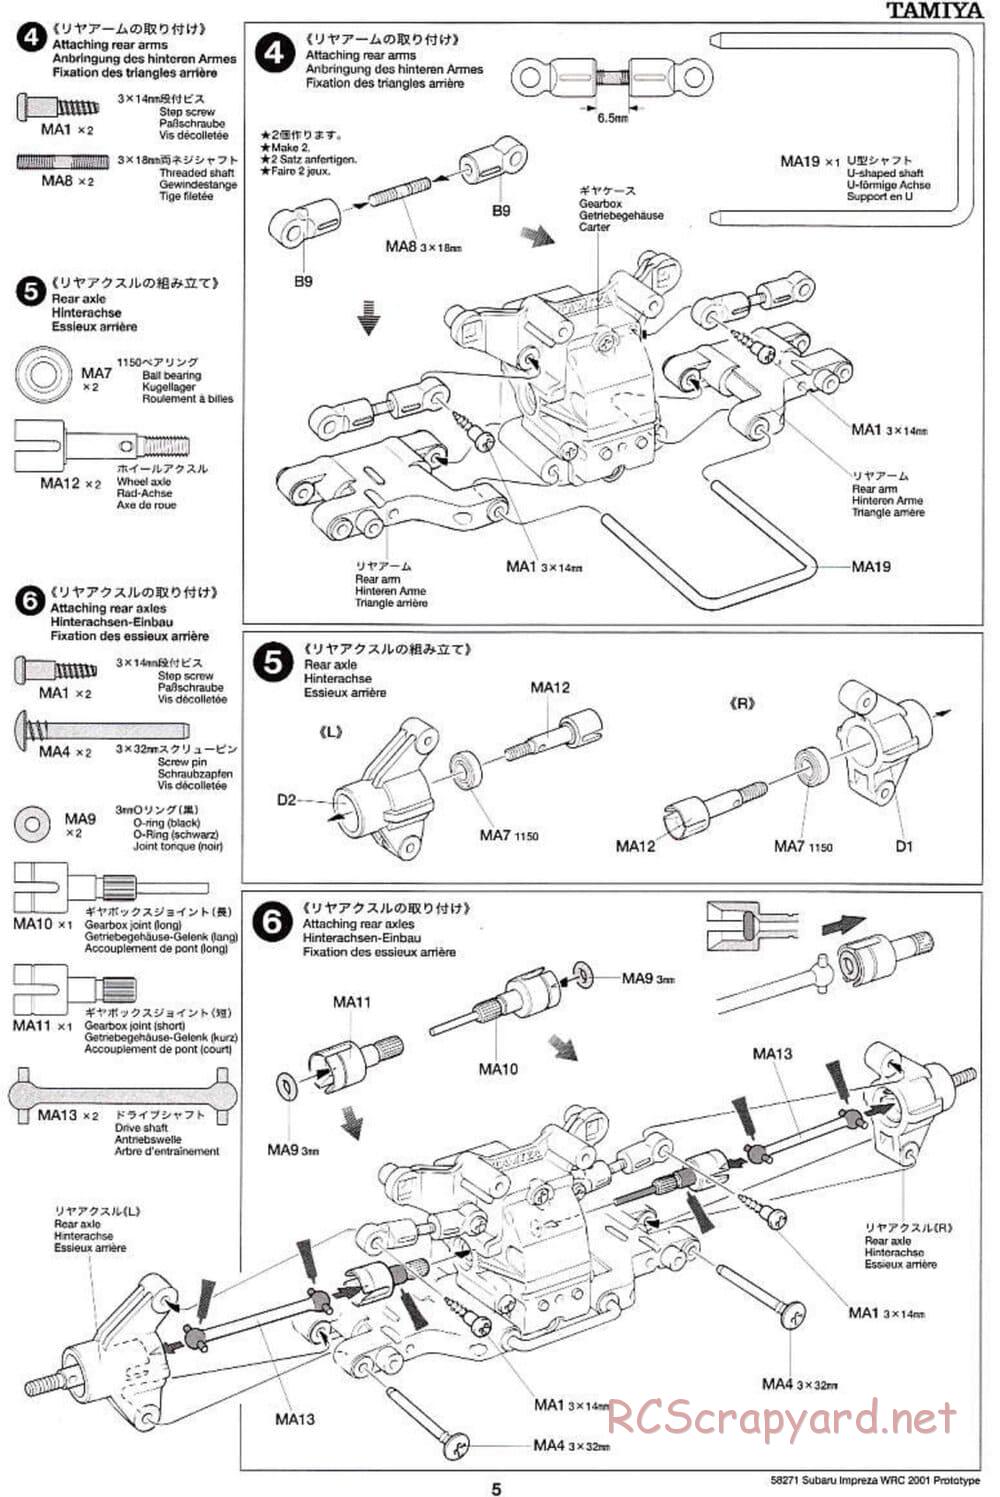 Tamiya - Subaru Impreza WRC 2001 Prototype - TB-01 Chassis - Manual - Page 5